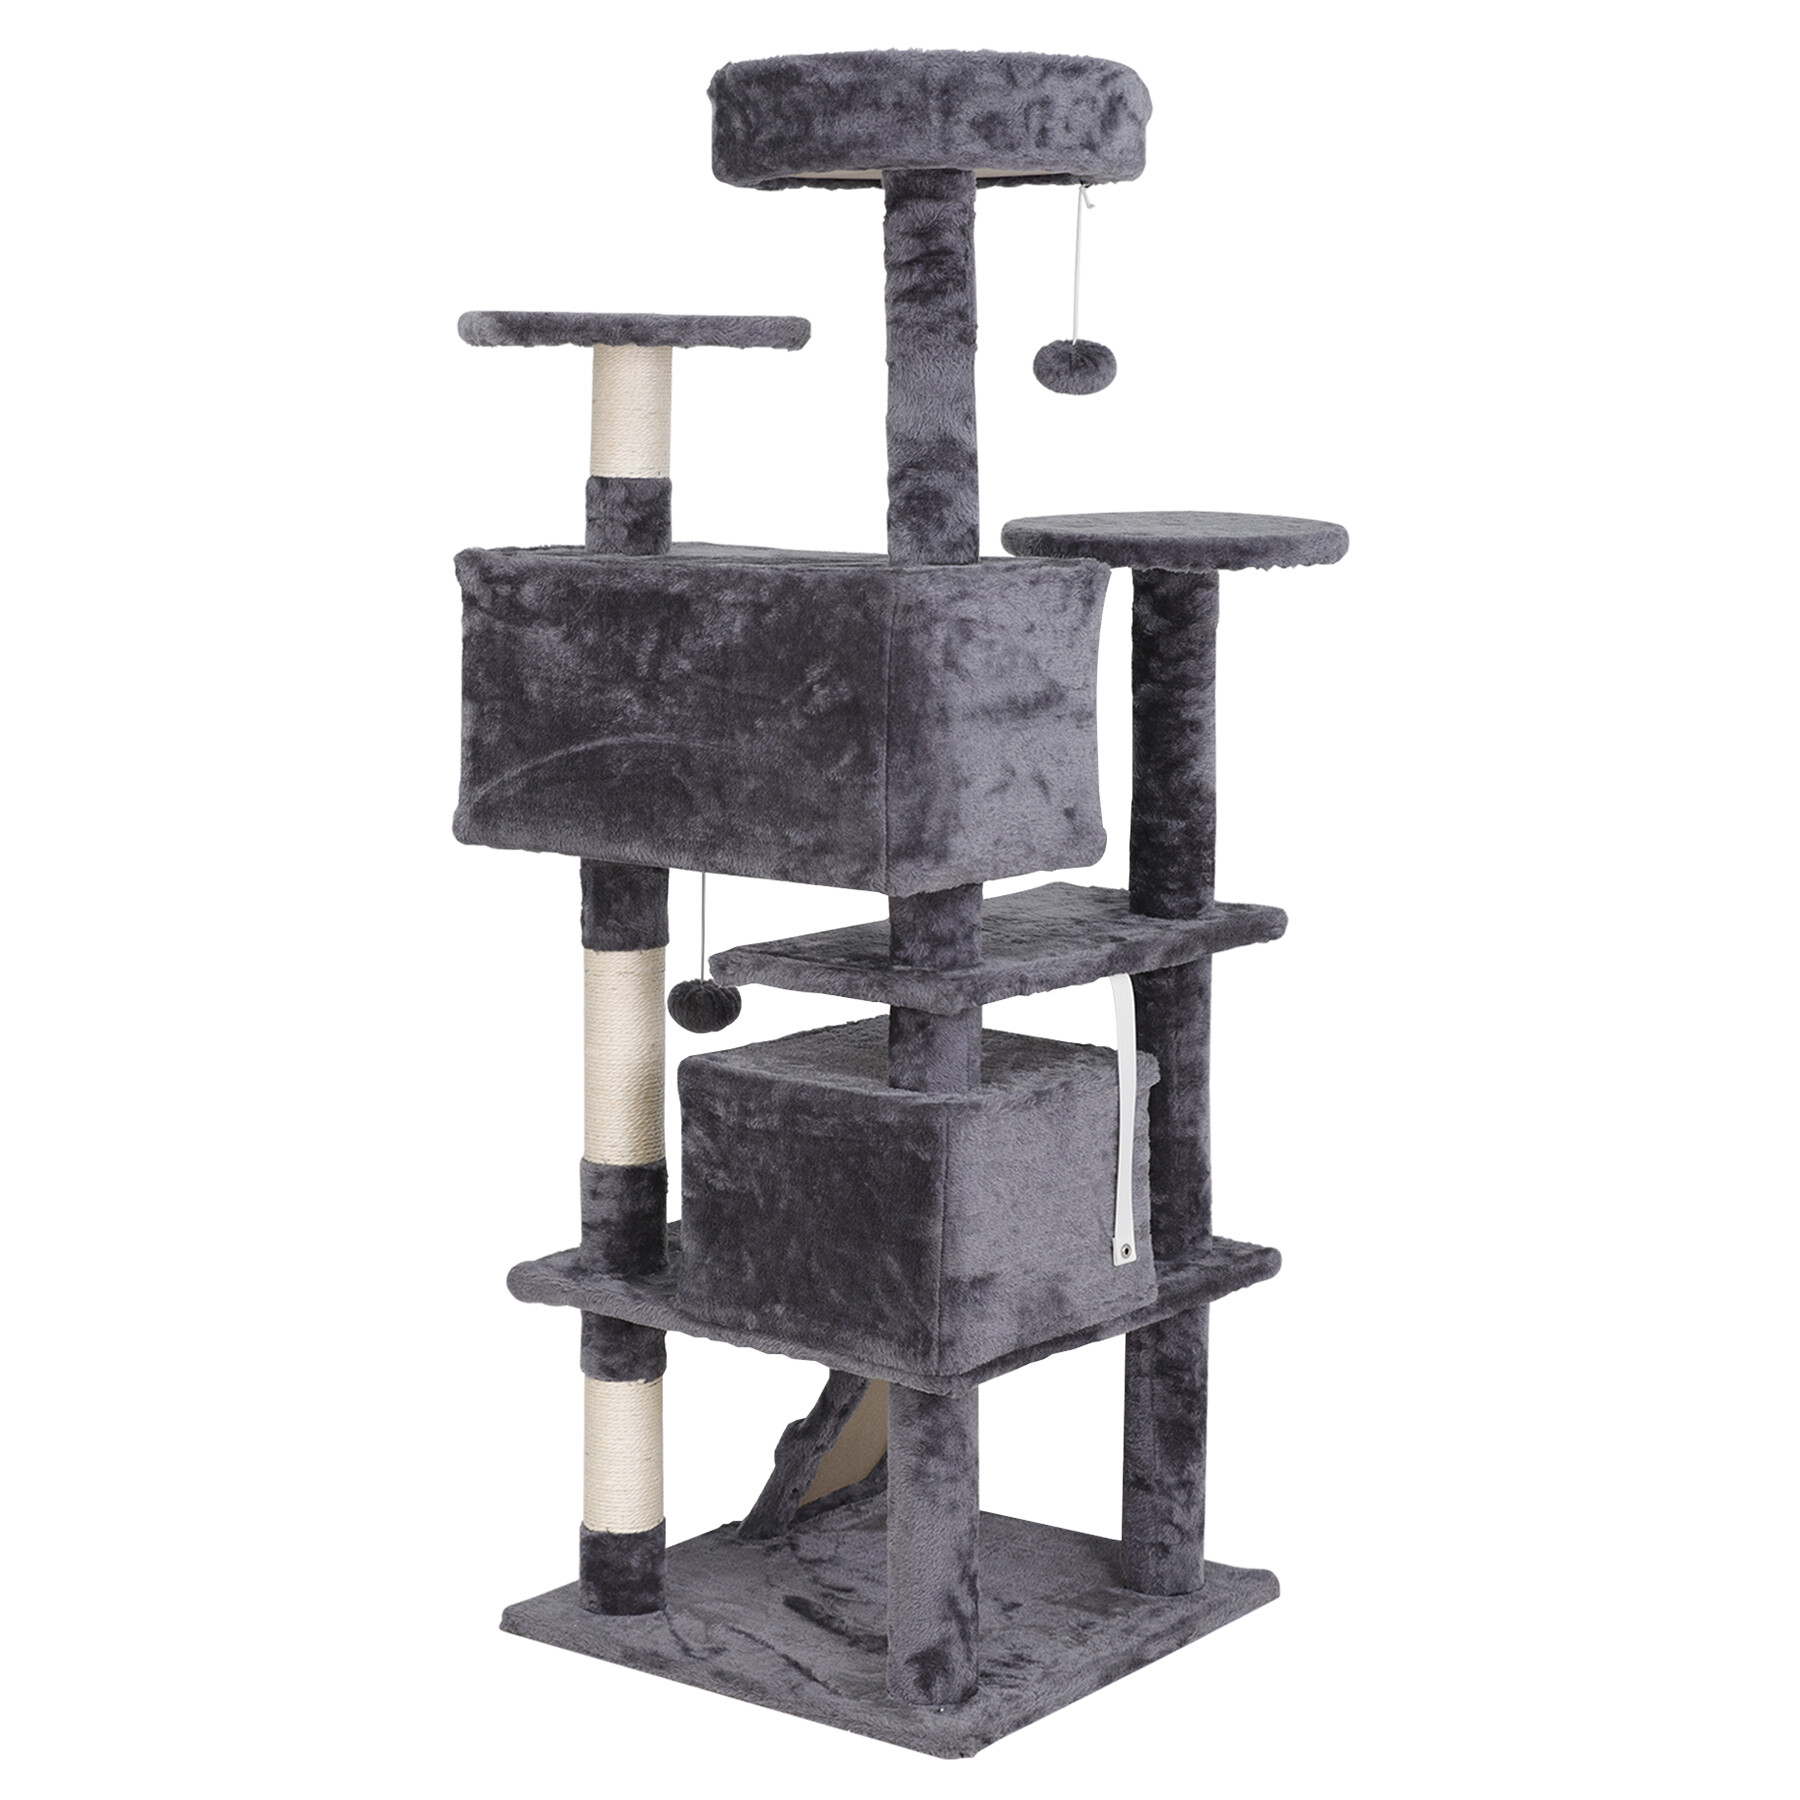 Zenstyle 53-in Cat Tree & Condo Scratching Post Tower, Dark Gray - image 9 of 14